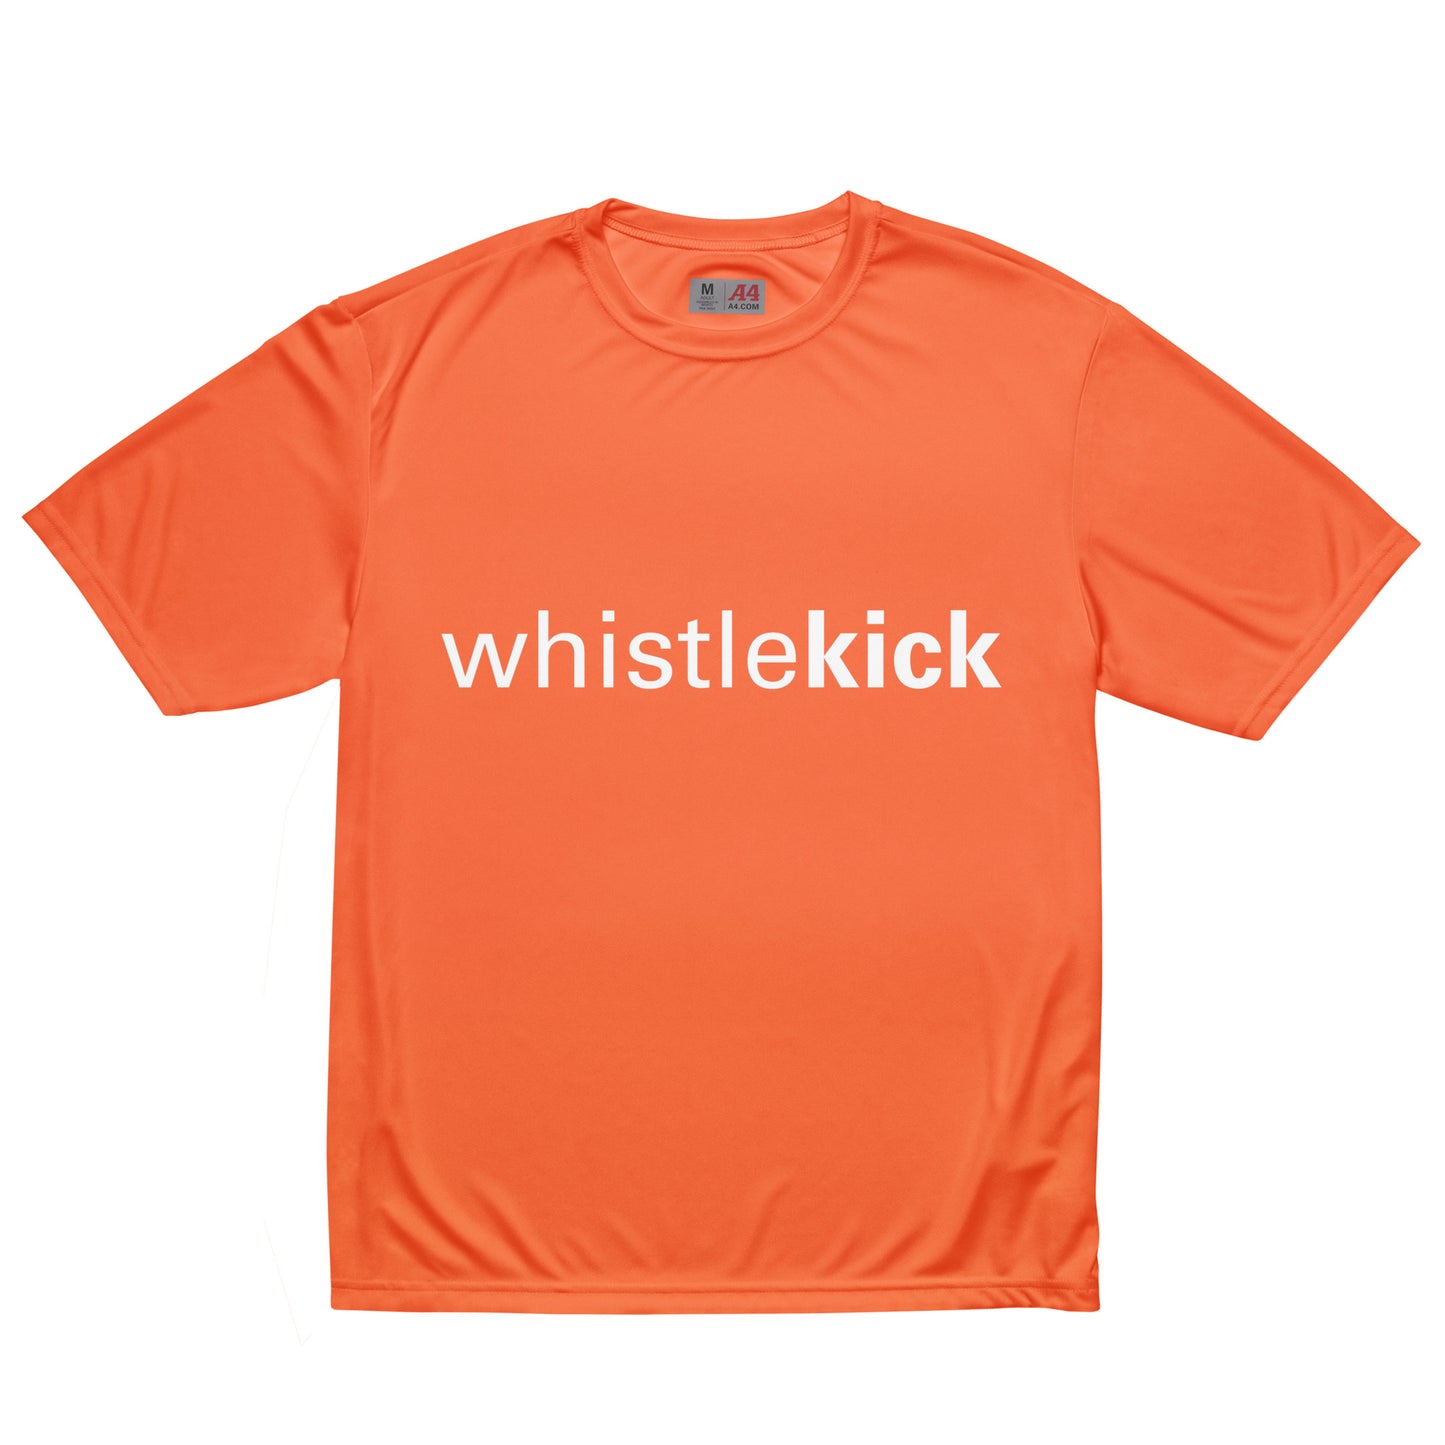 whistlekick dri-fit Tee